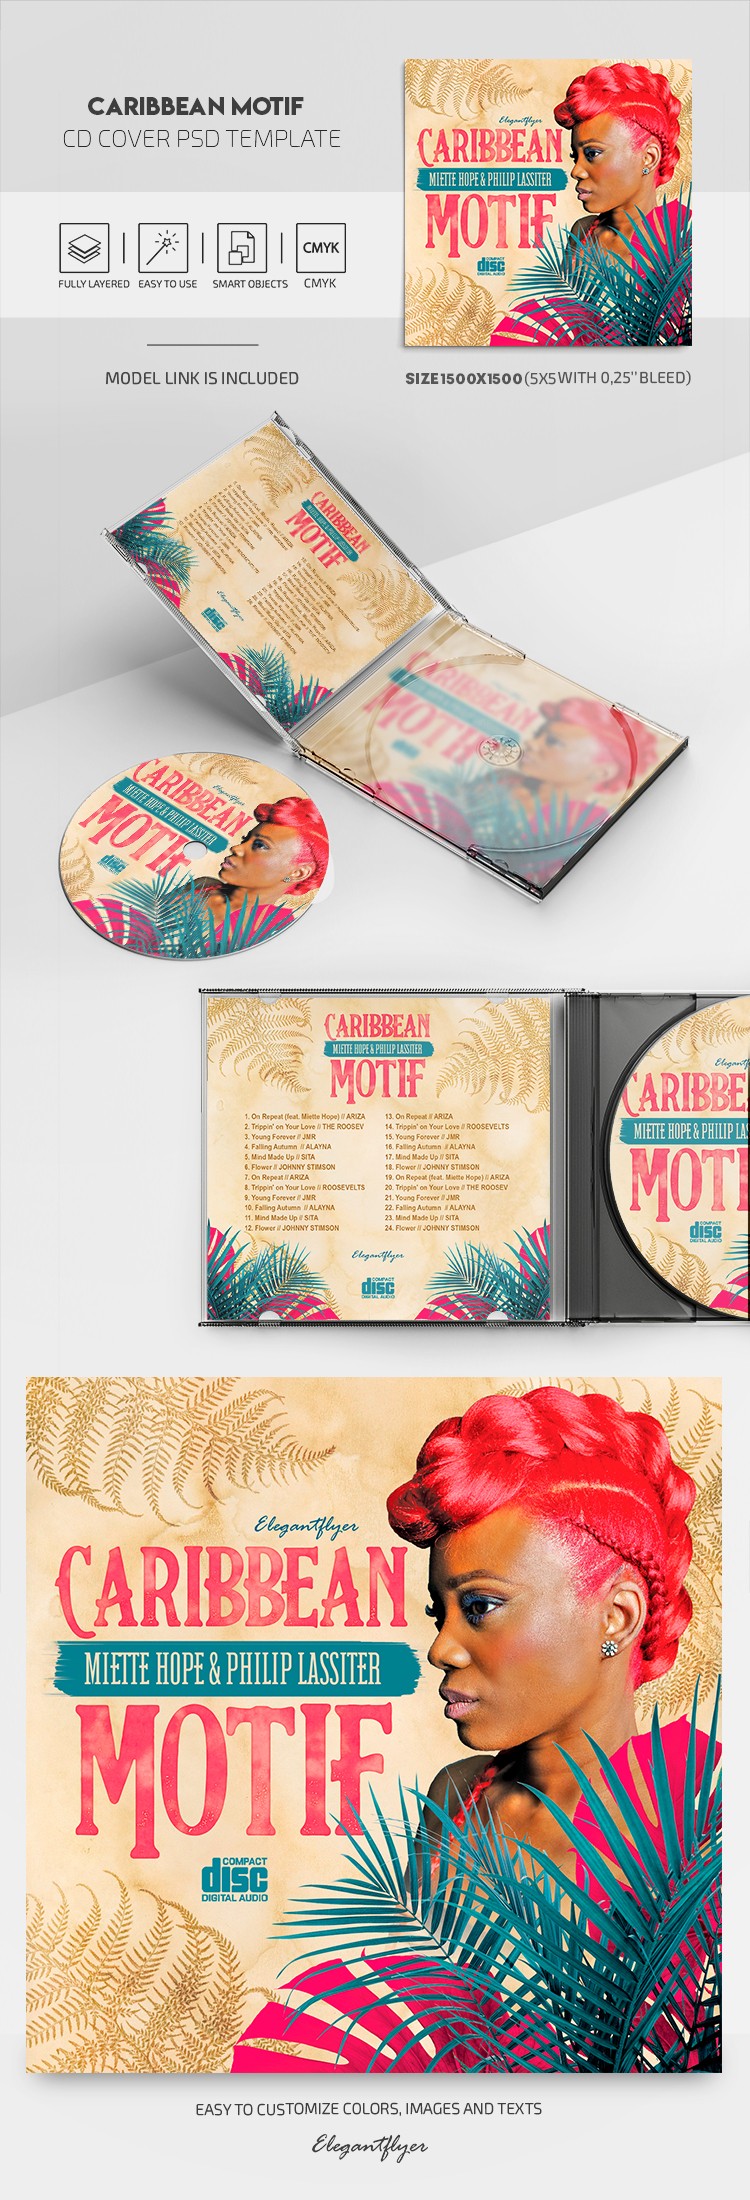 Karibisches Motiv CD Cover by ElegantFlyer